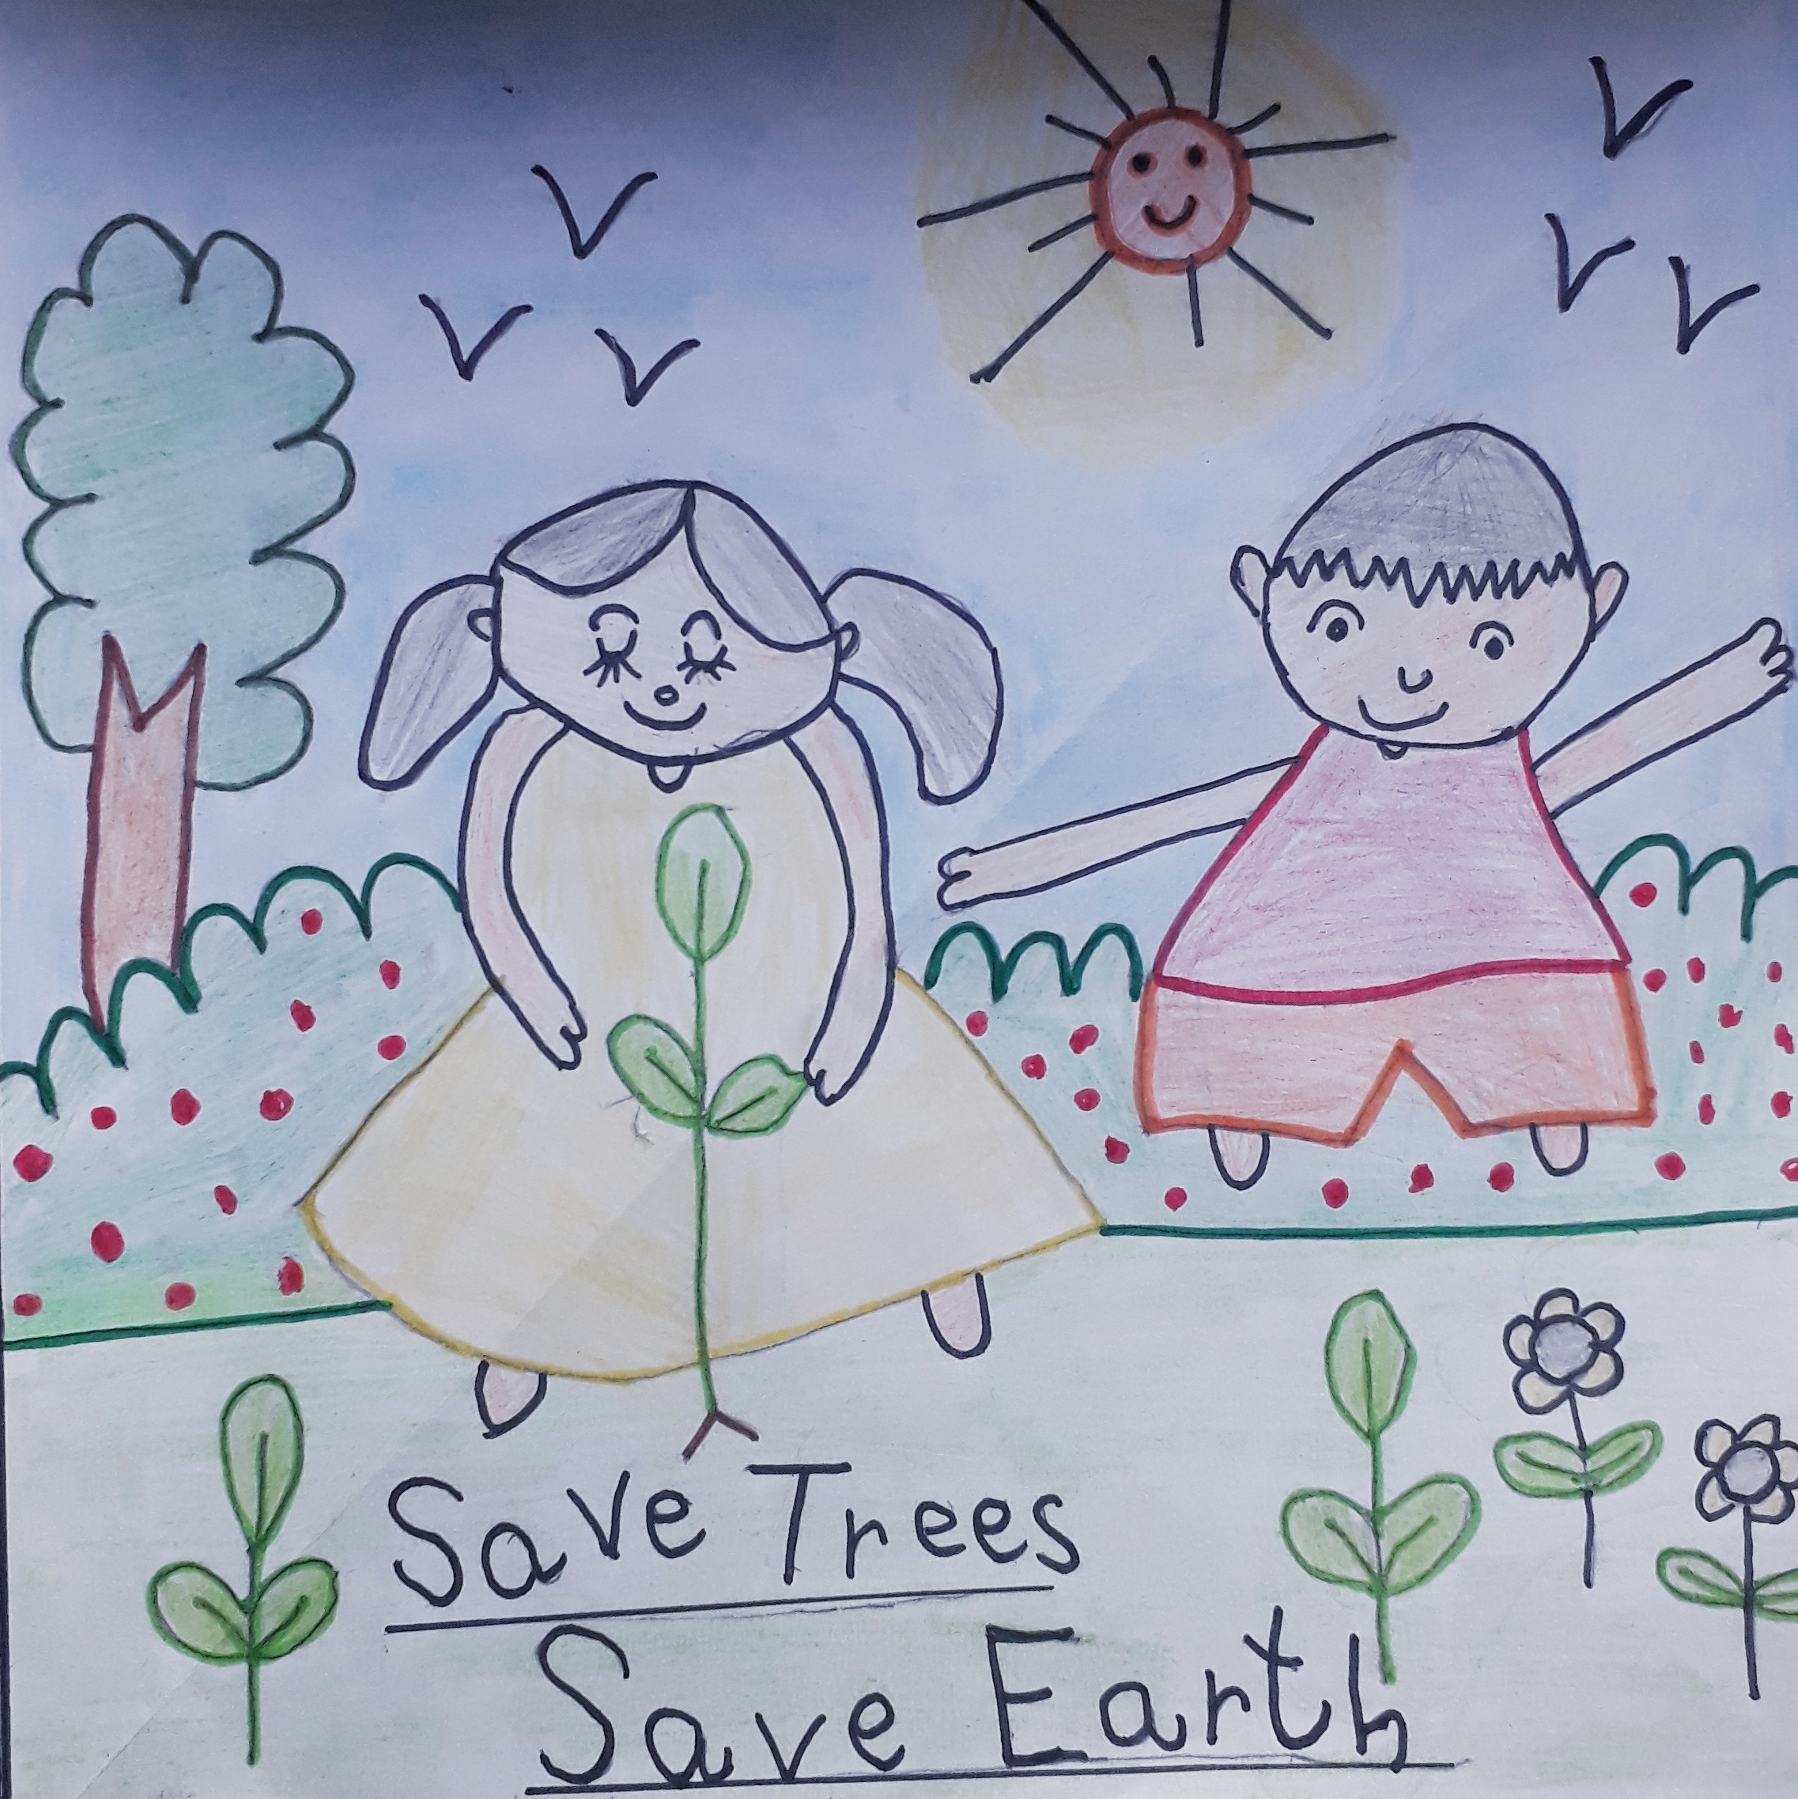 ArtStation - Save Trees | Save Earth | Save Lives